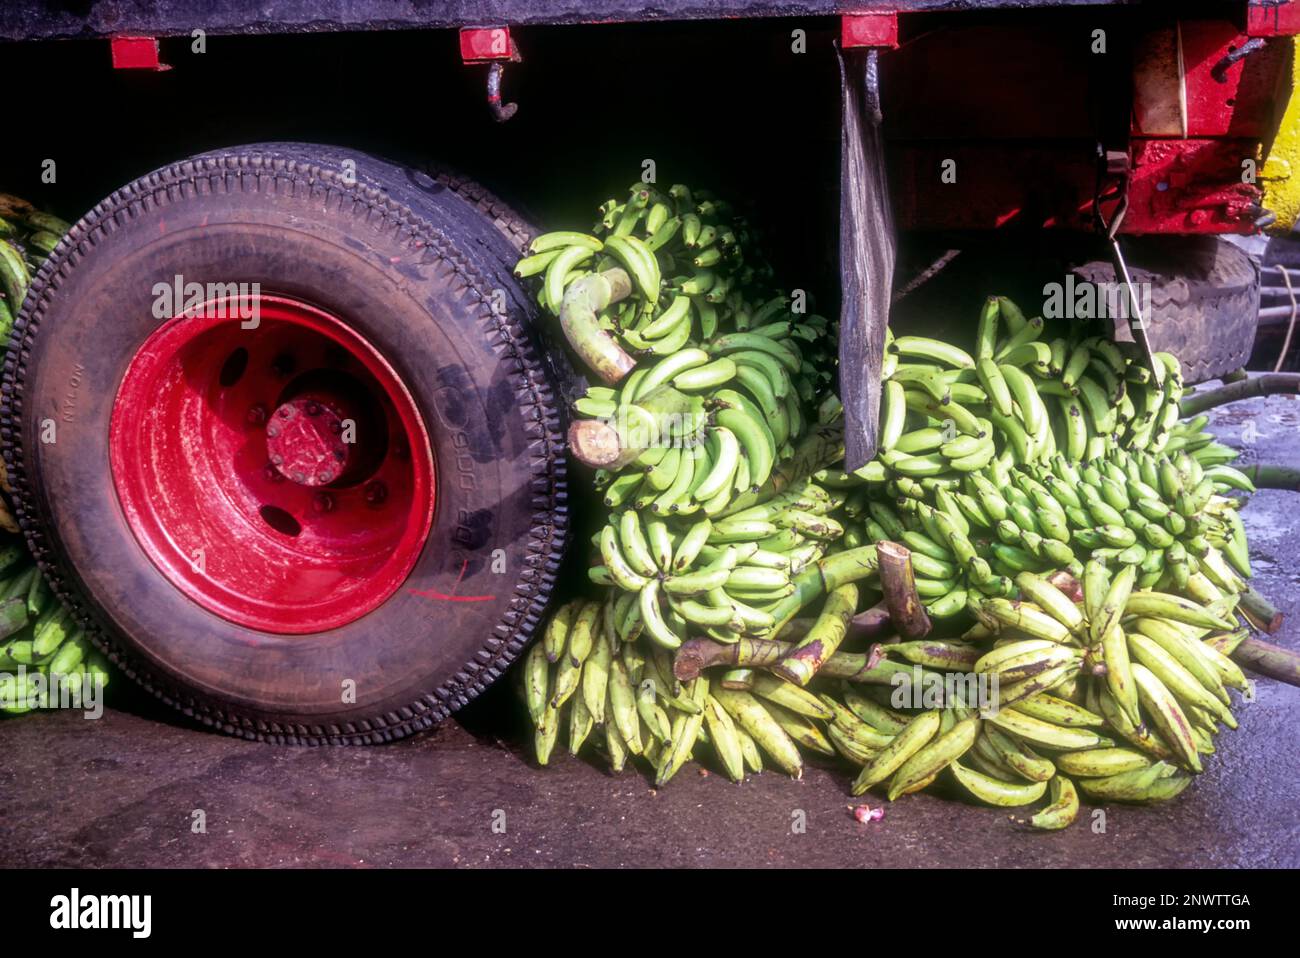 Nendram pazham banana underneath lorry tyre in Ernakulam, Kerala, India, Asia Stock Photo